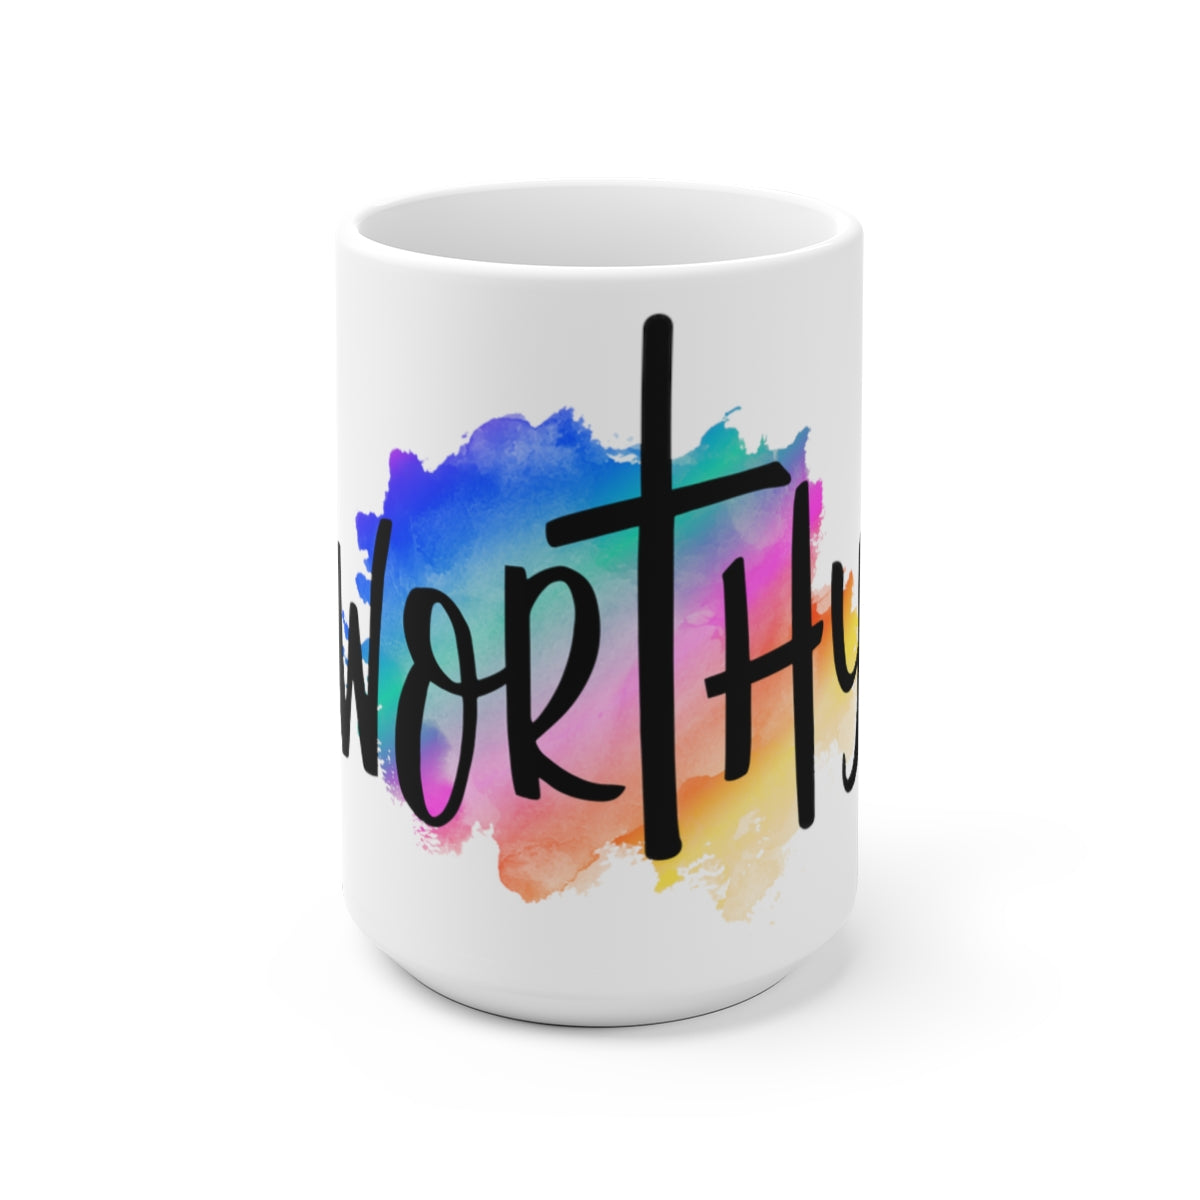 Worthy Set (Coffee mug & Journal)